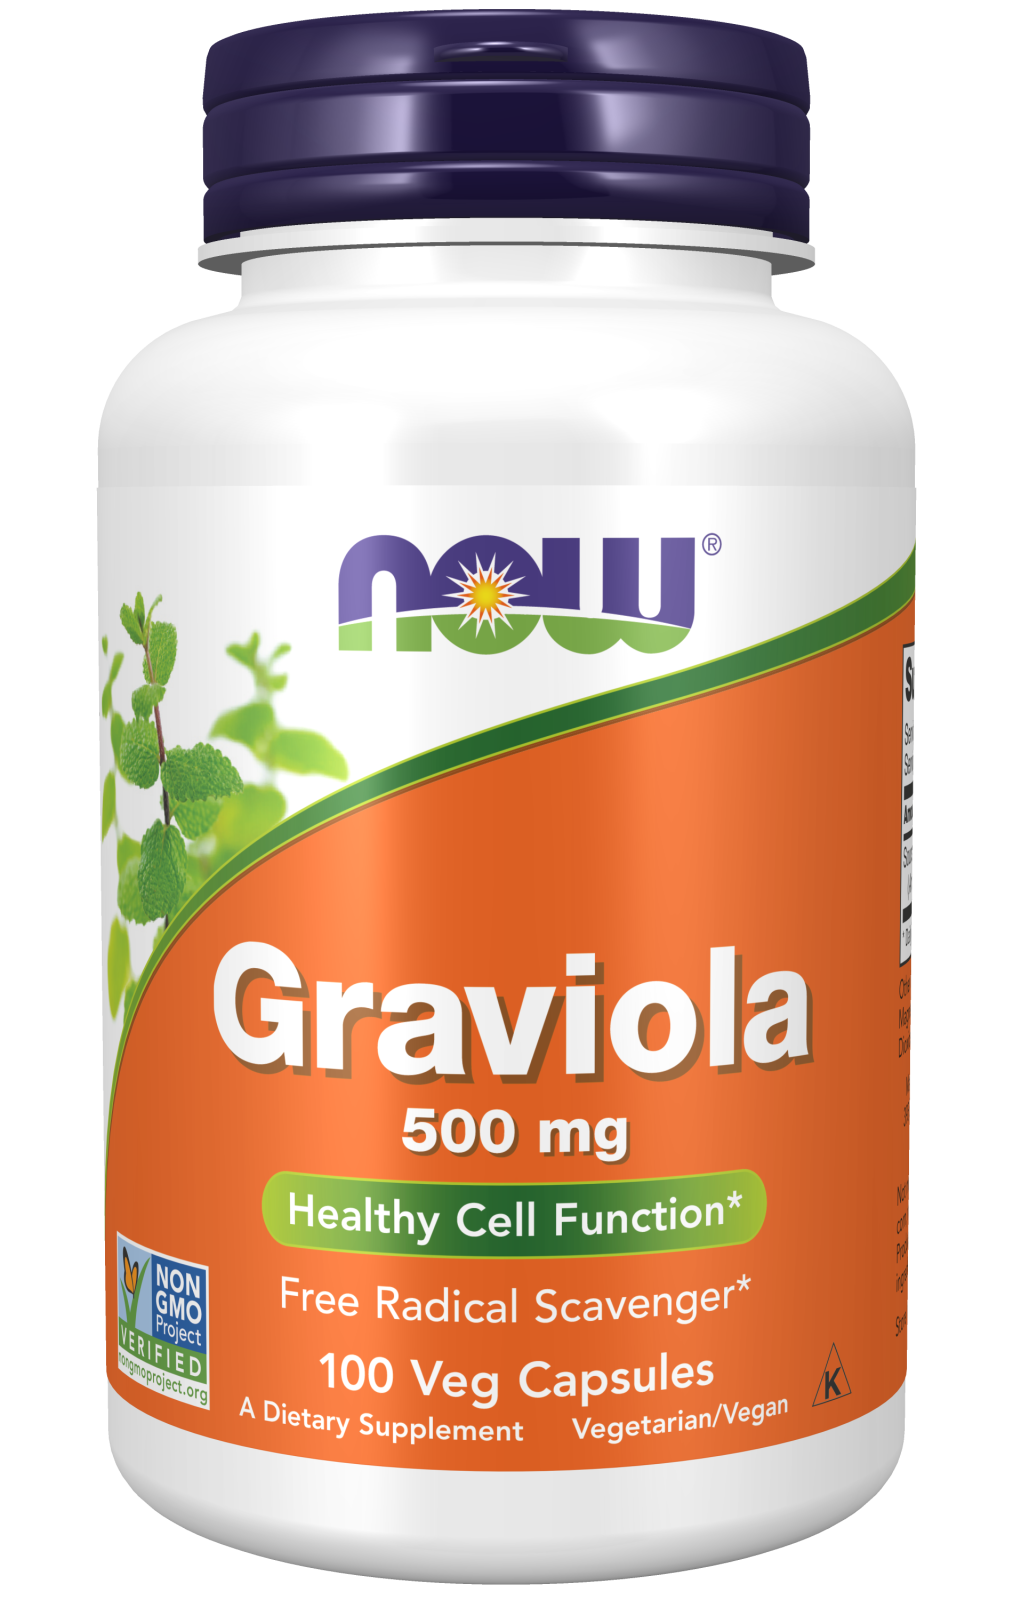 Graviola 500 mg - 100 Veg Capsules Bottle Front